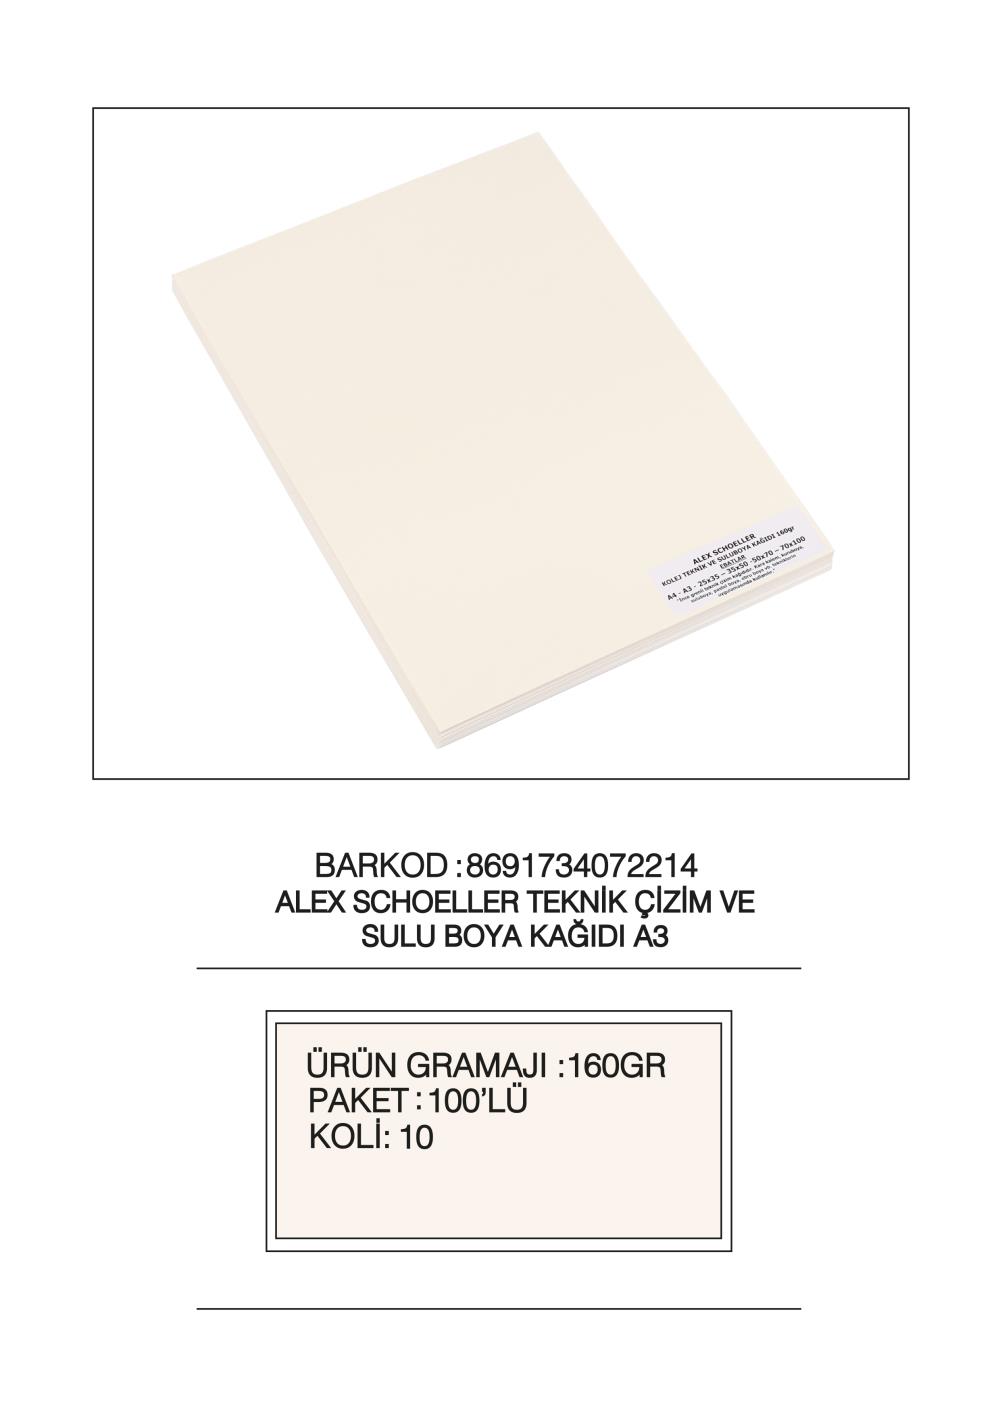 Teknik Çizim ve Suluboya Kağıtları A3 / A4 / 25x35 / 35x50 / 50x70 / 70x100 (160 gr)